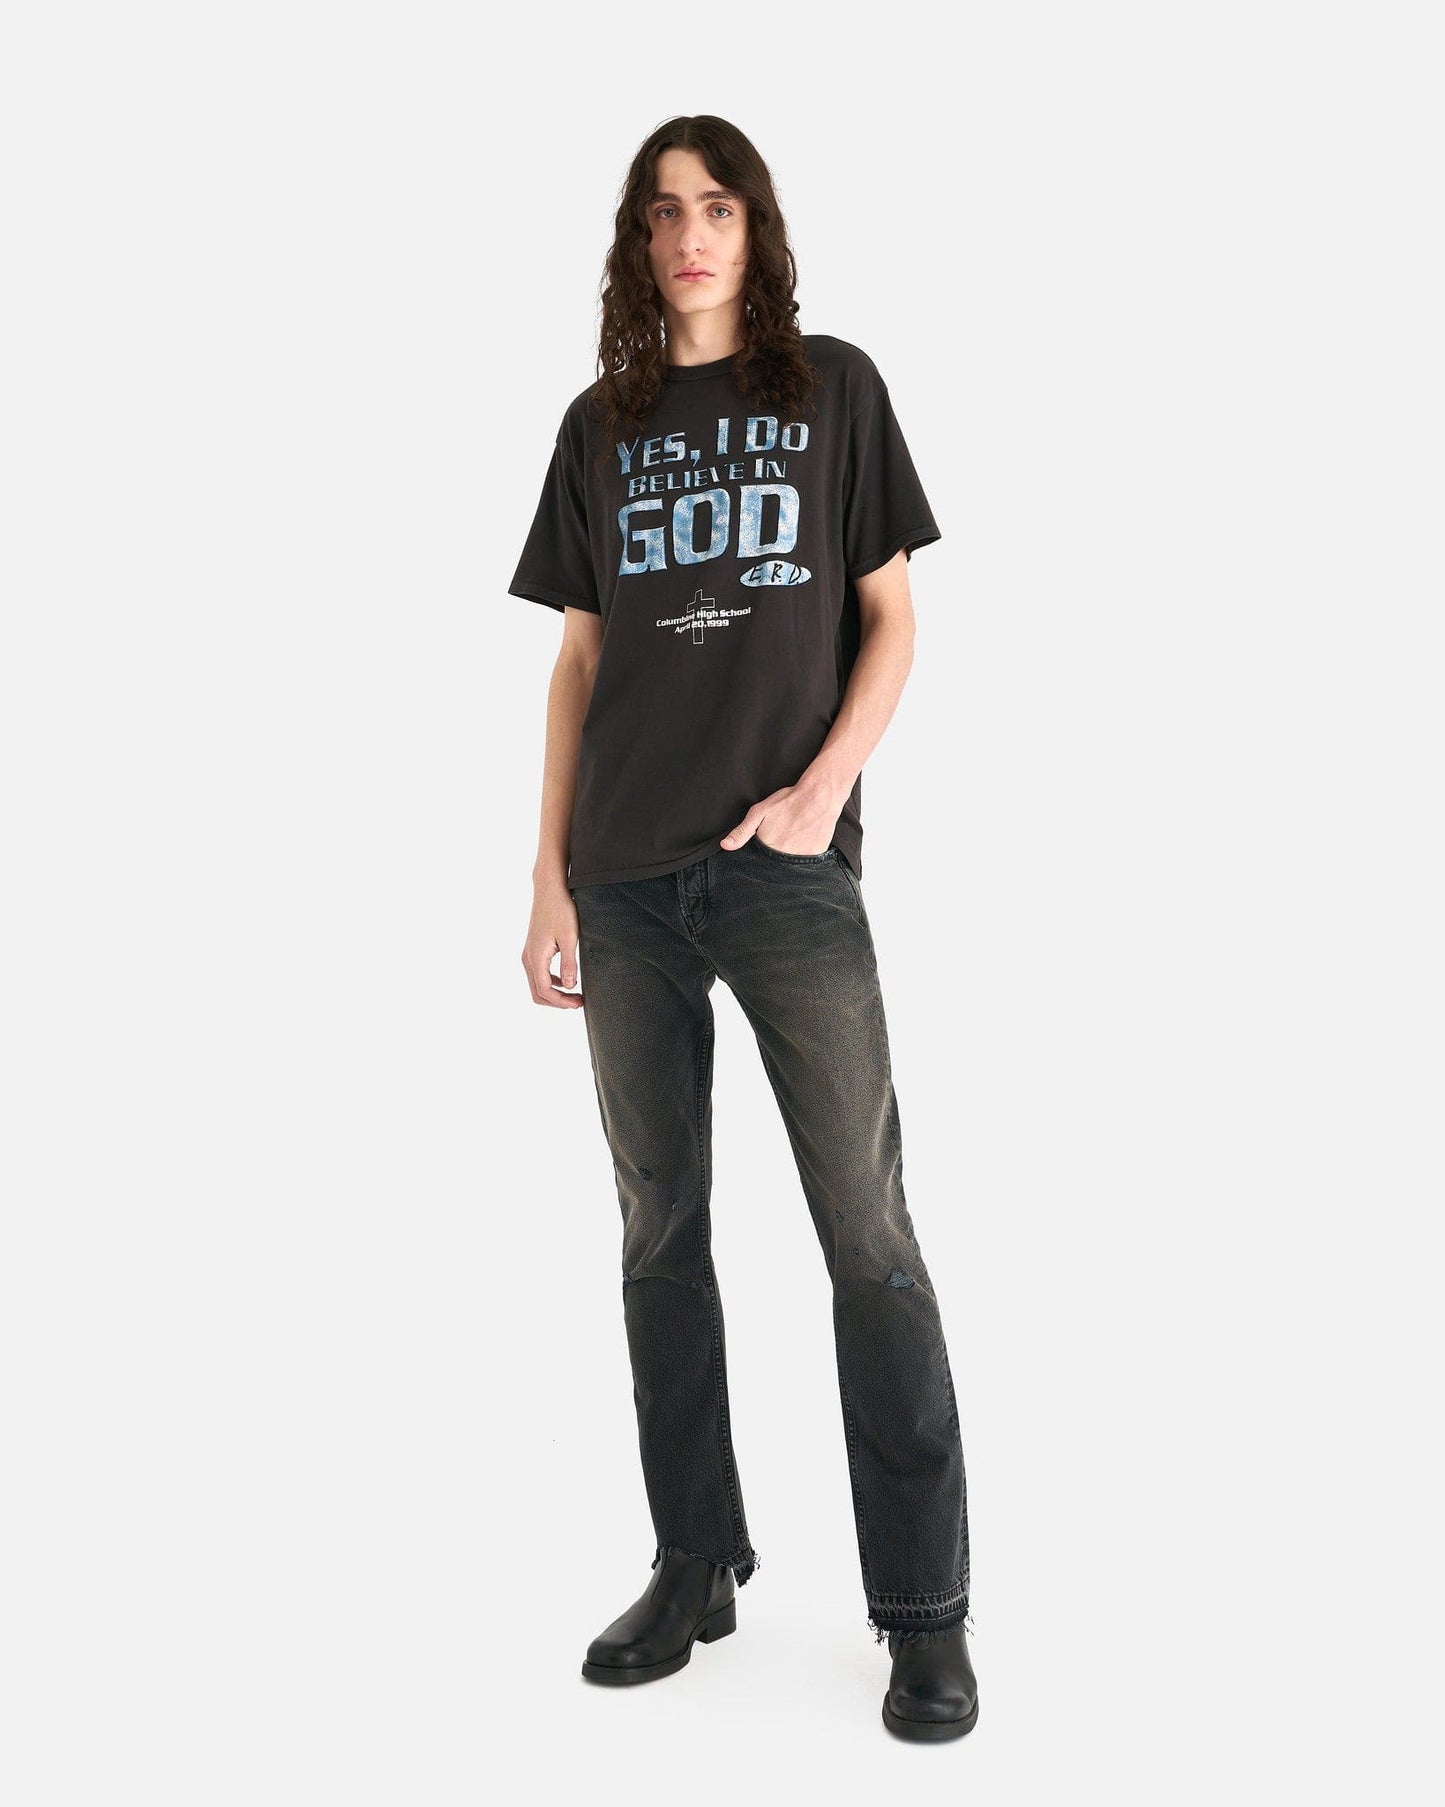 Enfants Riches Deprimes Men's T-Shirts I Believe In God T-Shirt in Faded Black/Multi